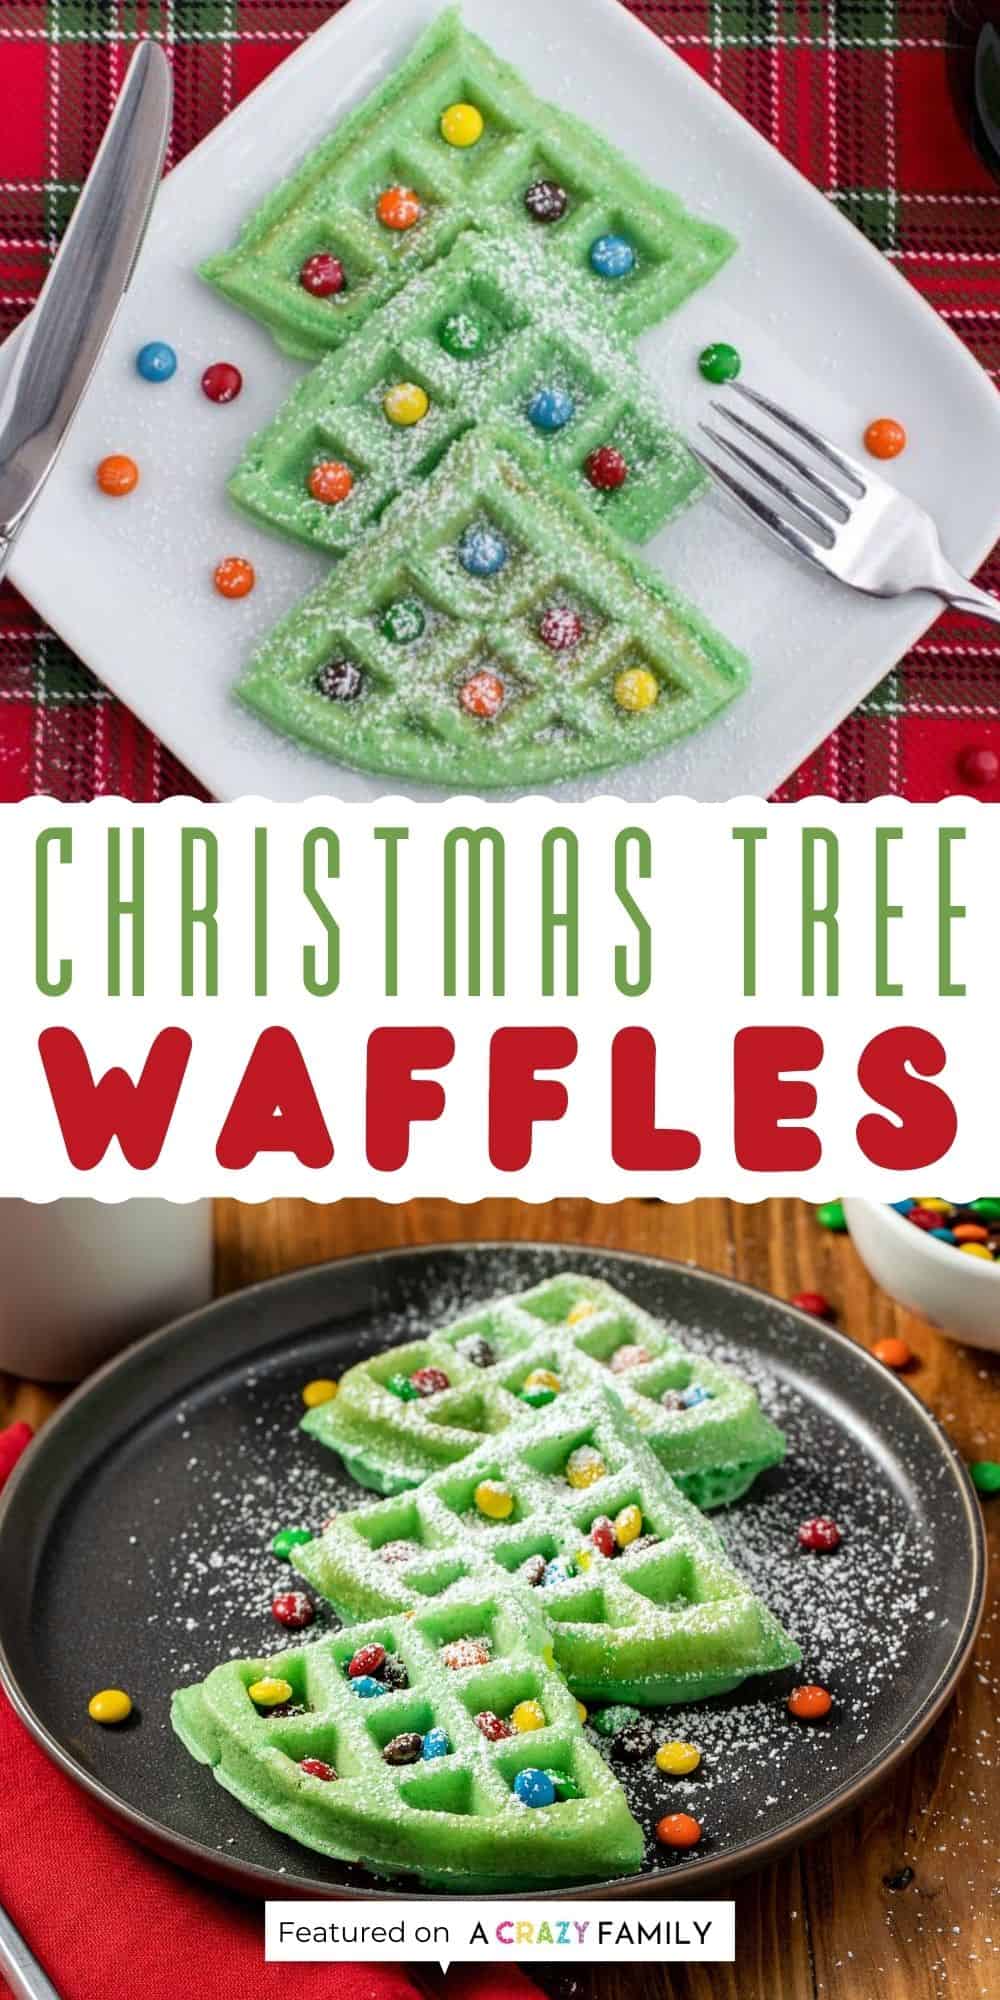 Christmas tree waffles